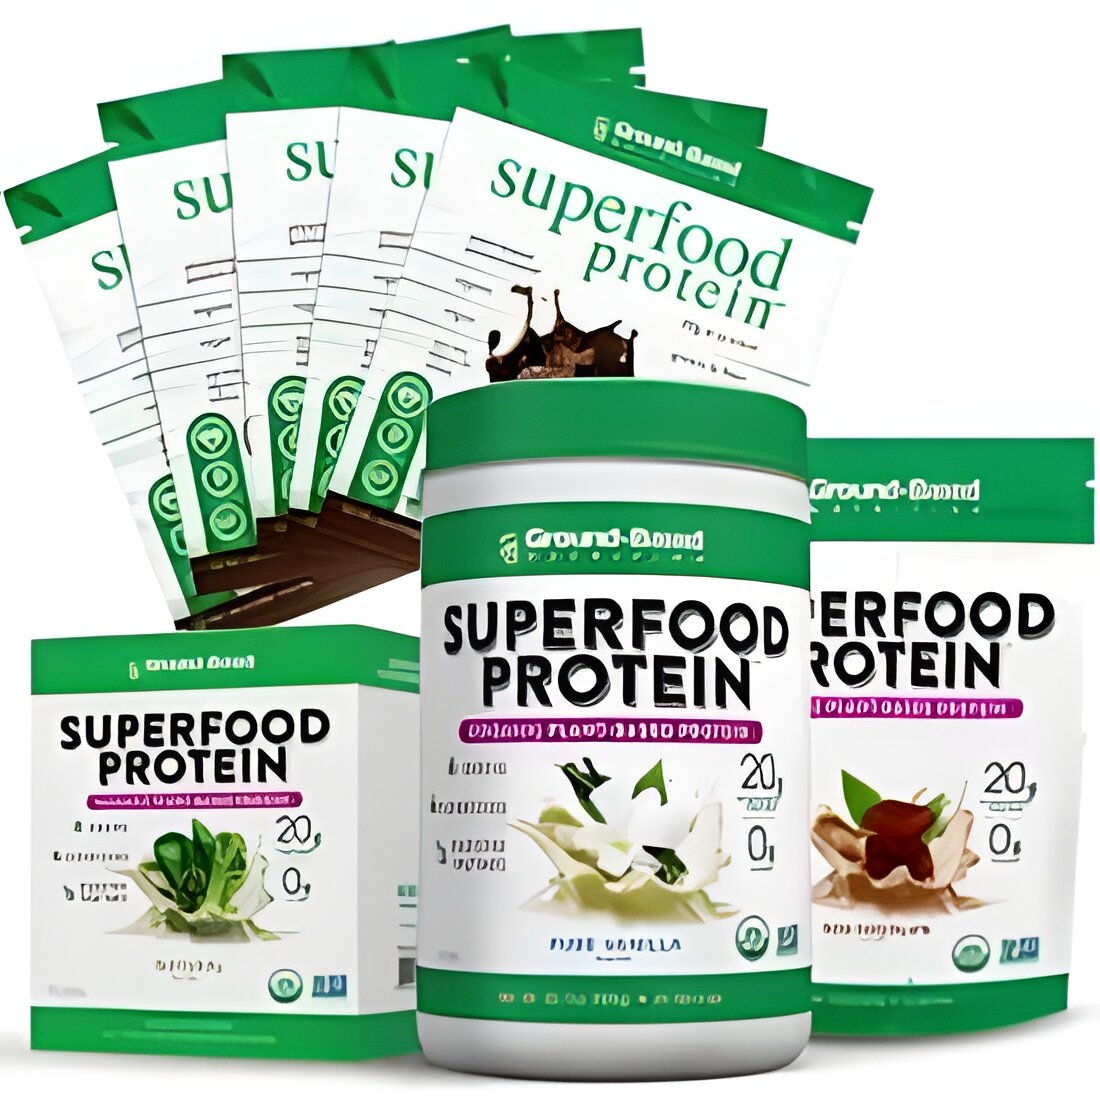 Free Superfood Protein Sample